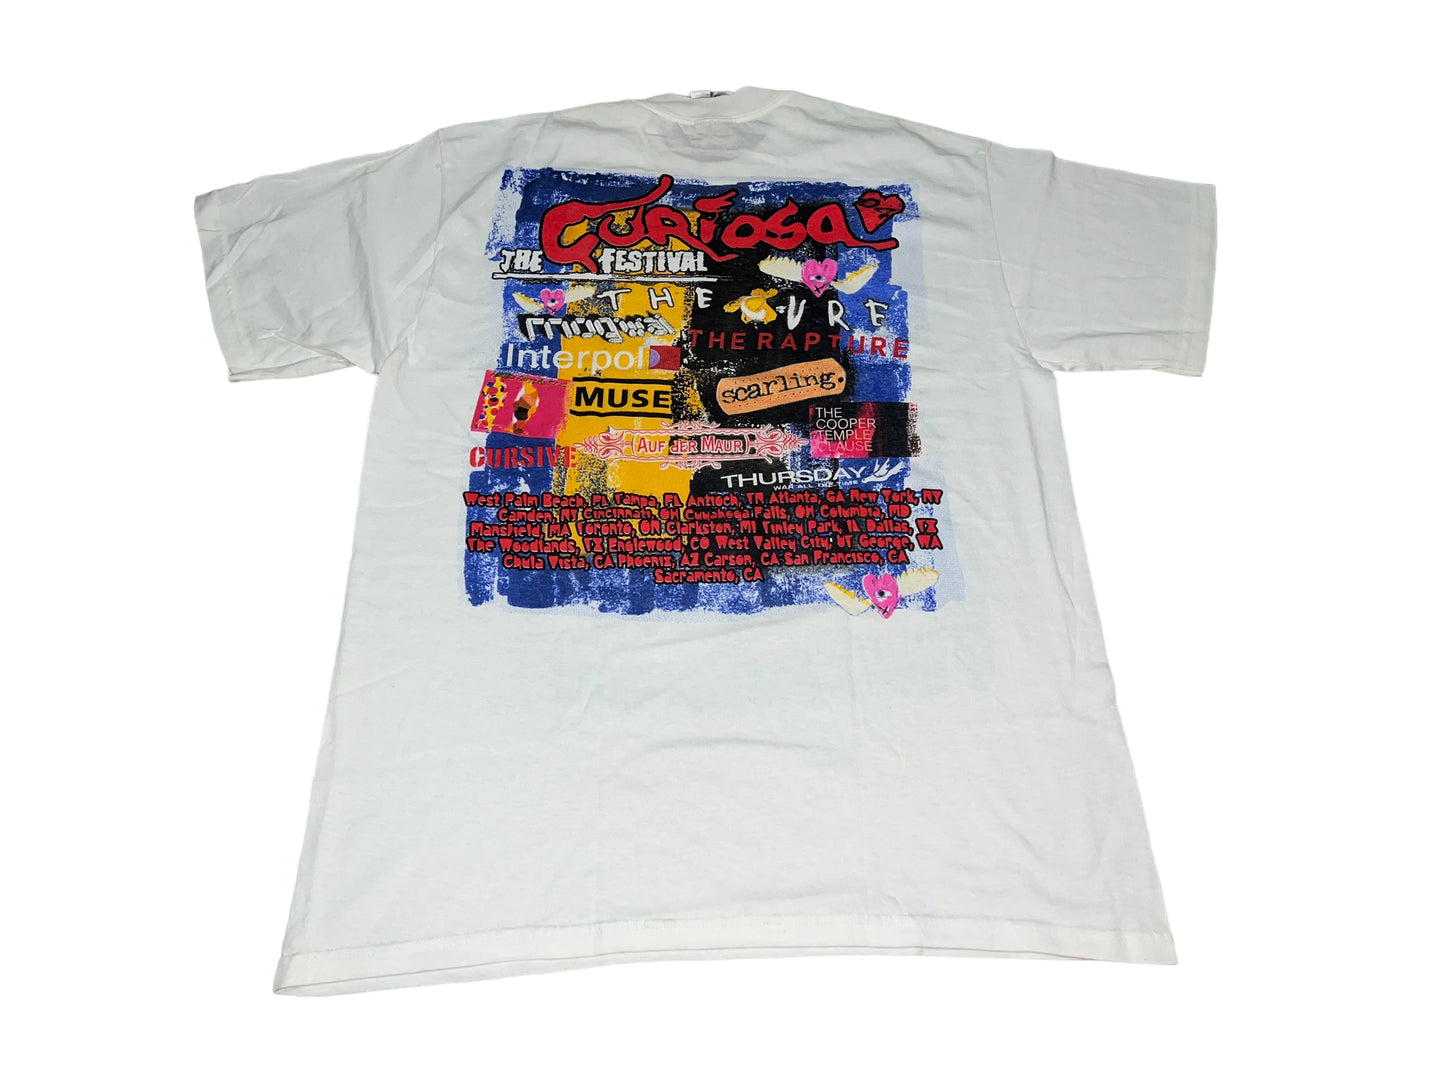 Vintage 2004 The Cure T-Shirt